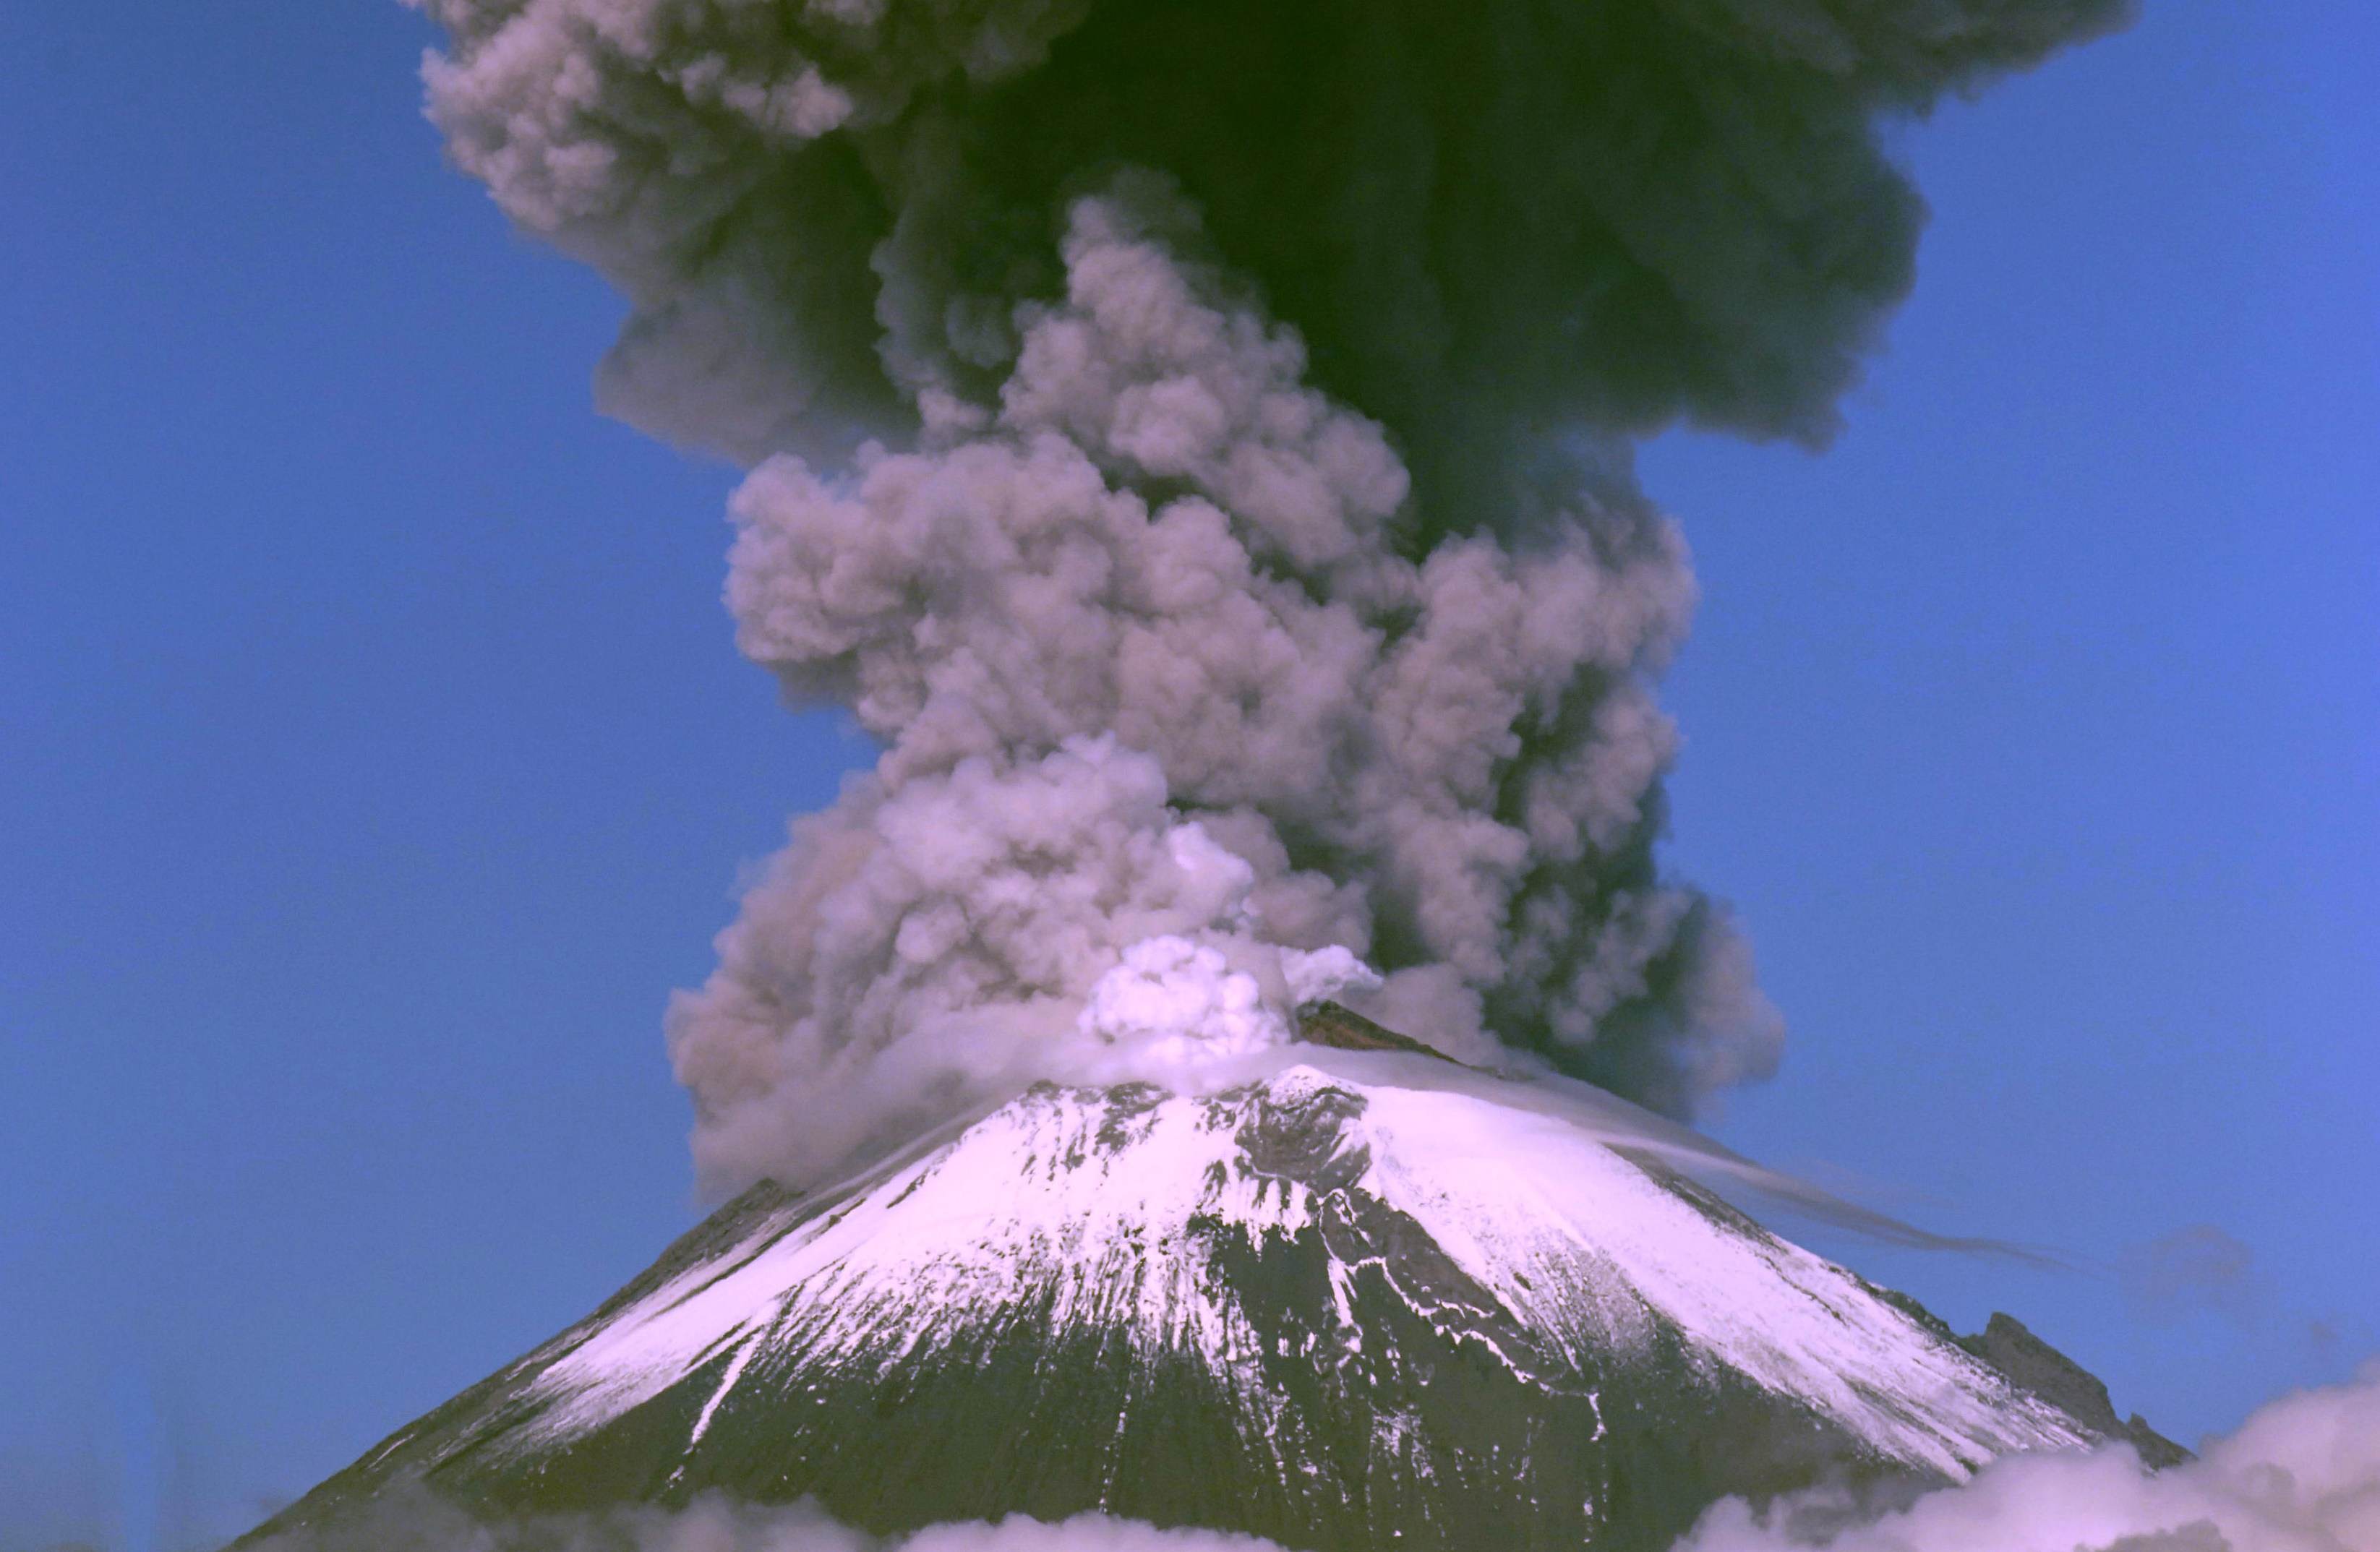 El volcán mexicano Popocatépetl lanza nube de ceniza a 4 kilómetros de altura